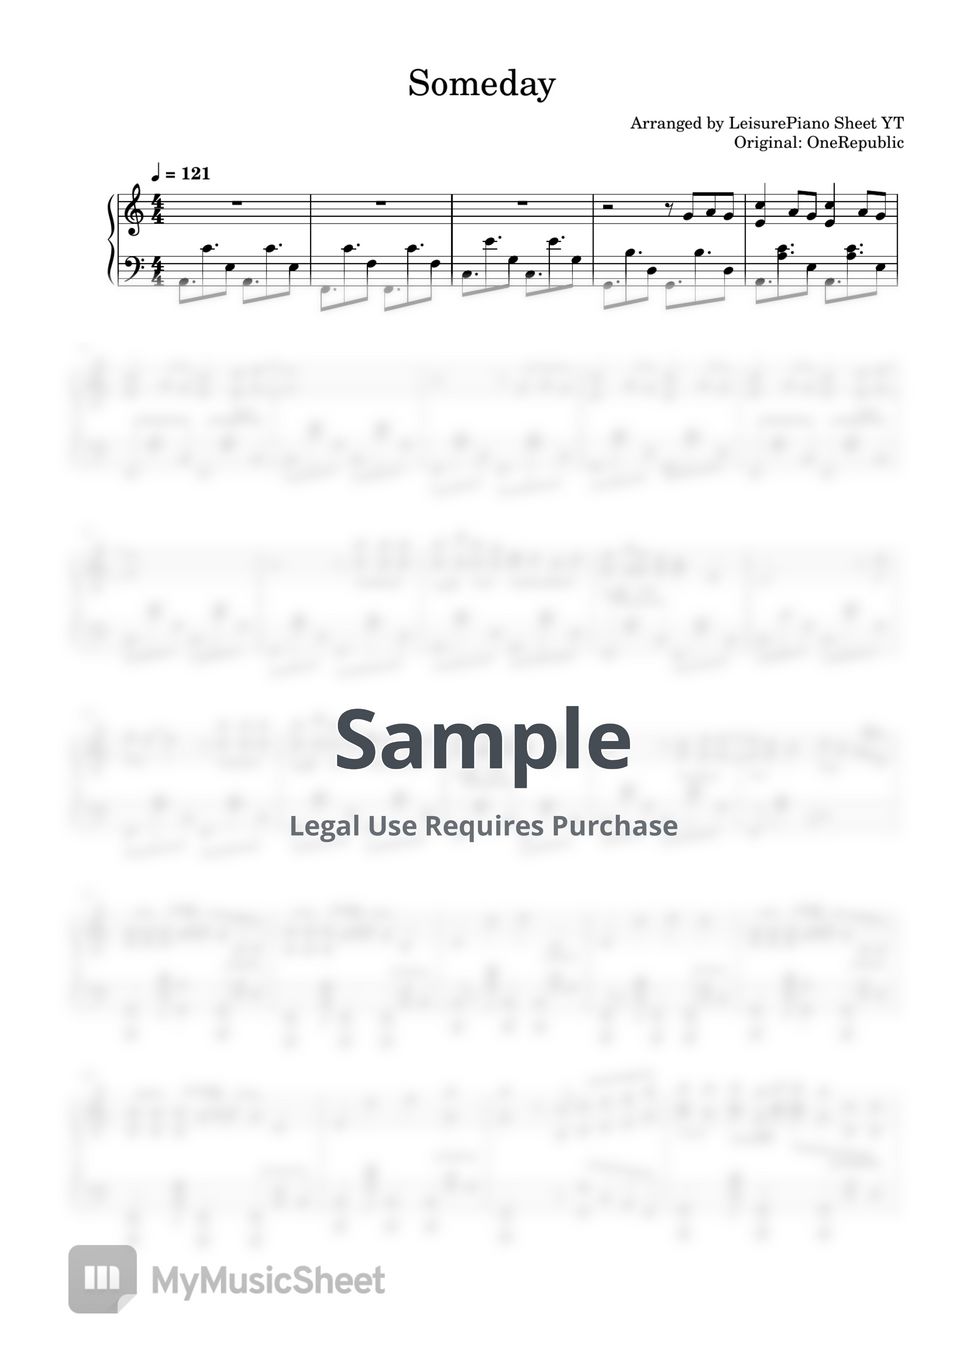 OneRepublic - Someday by Leisure Piano Sheets YT